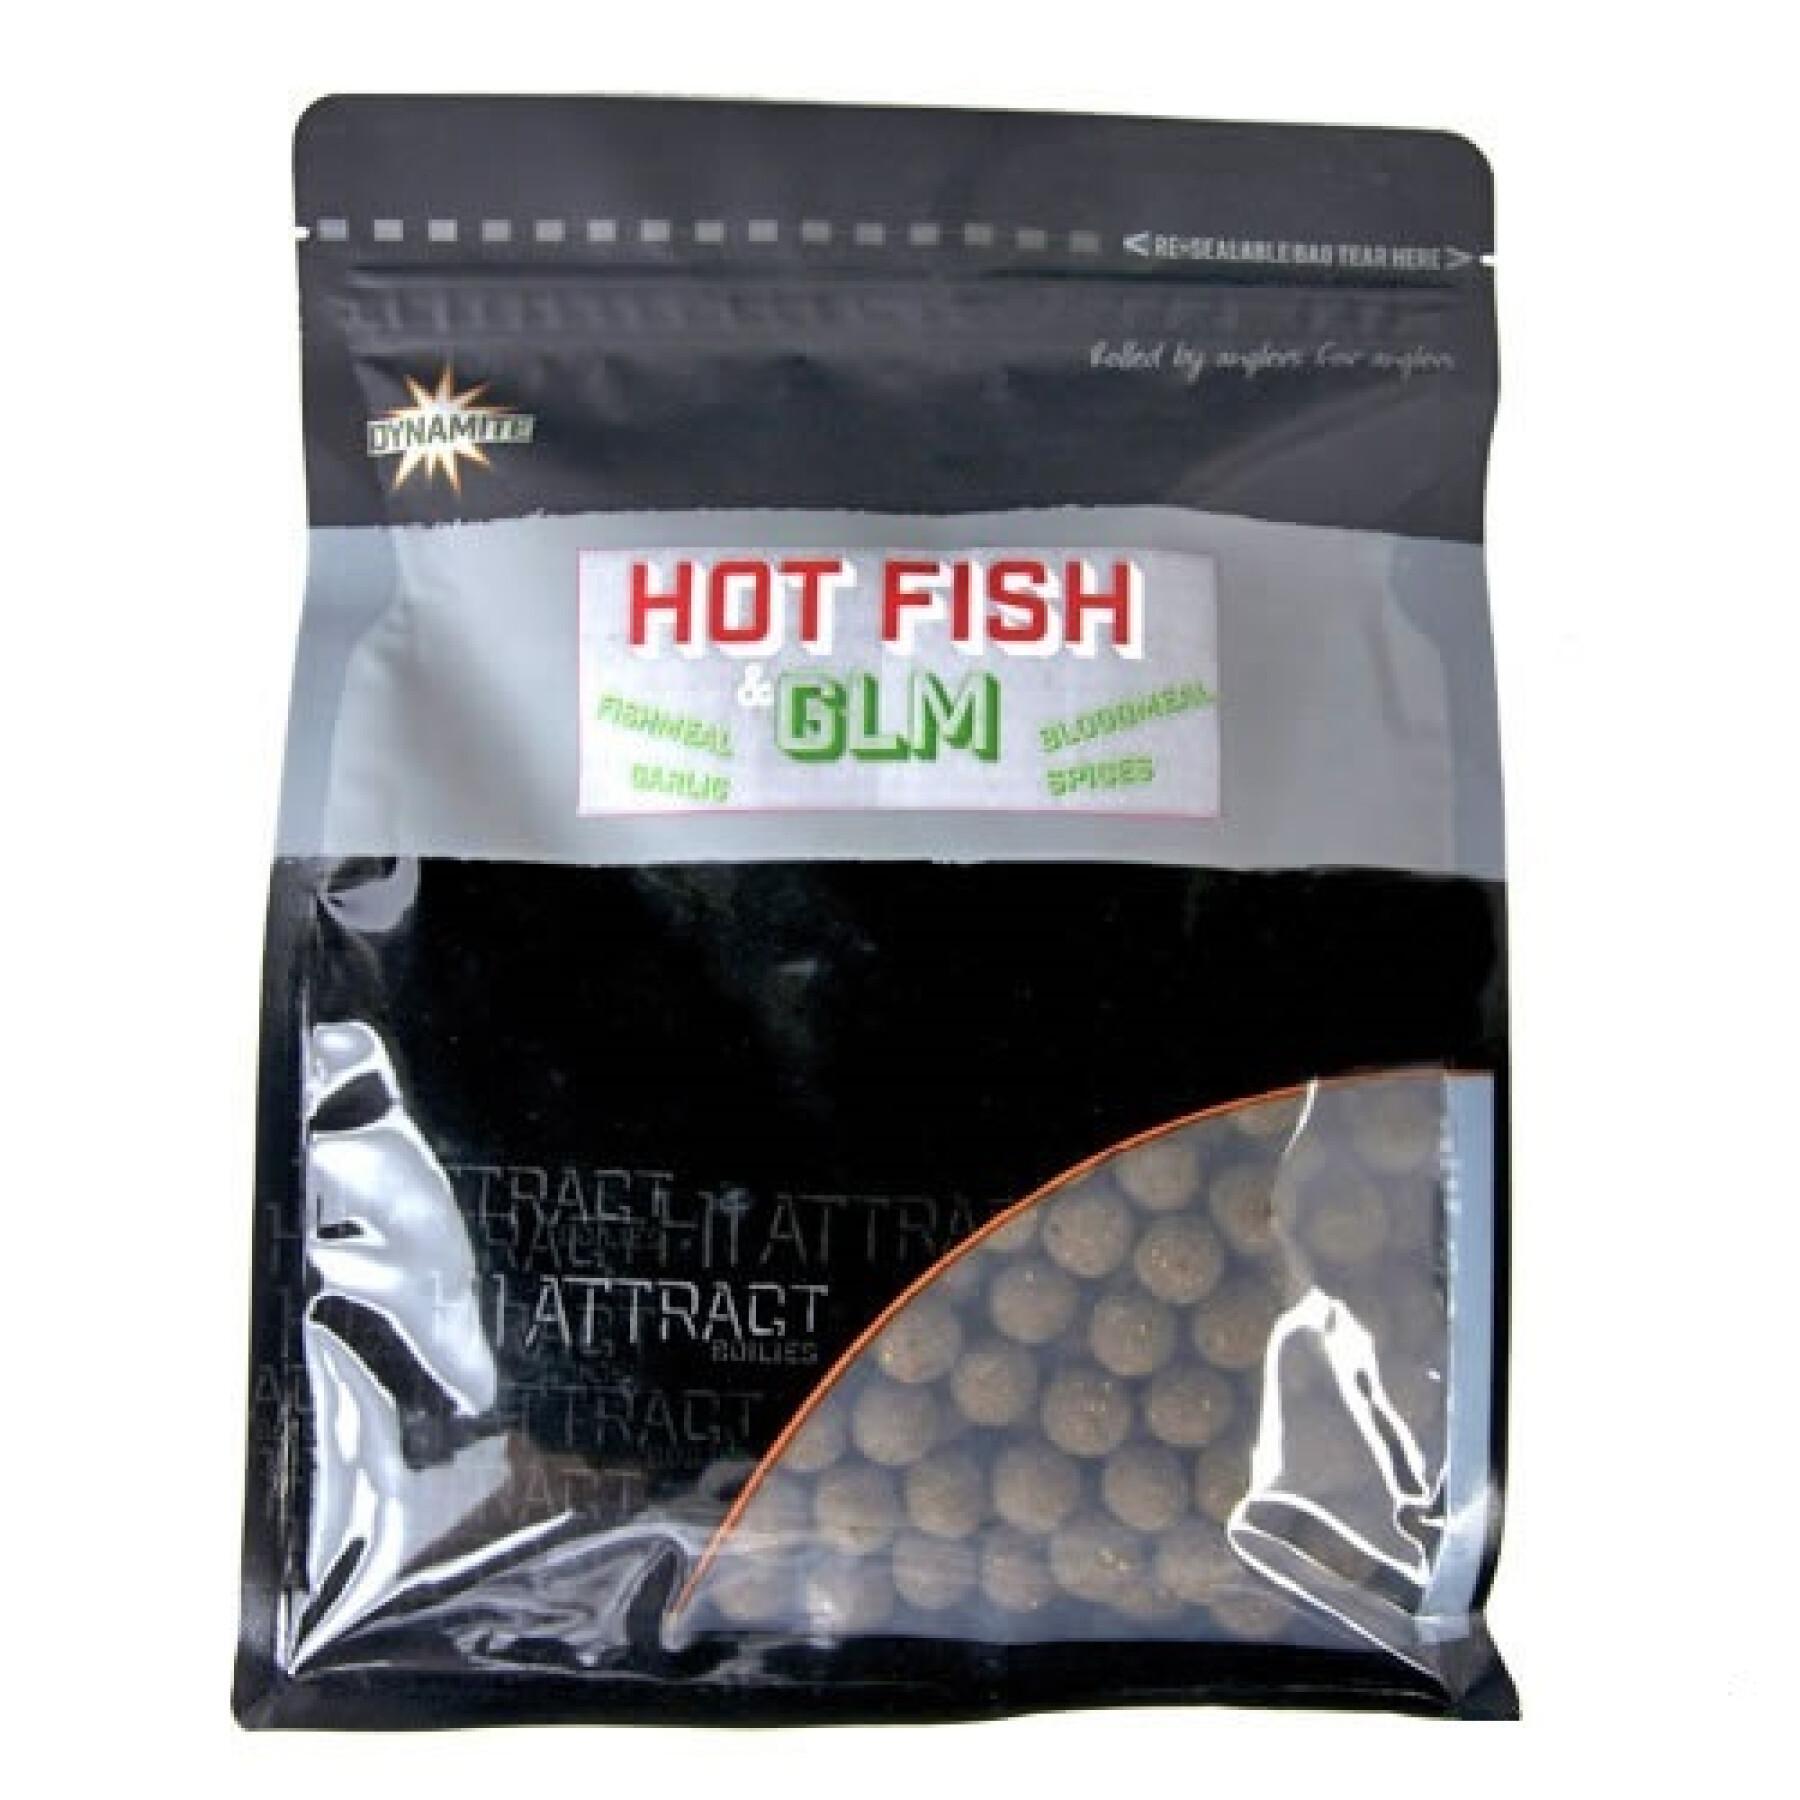 Hot fish & glm boilies 20mm Dynamite Baits 1kg